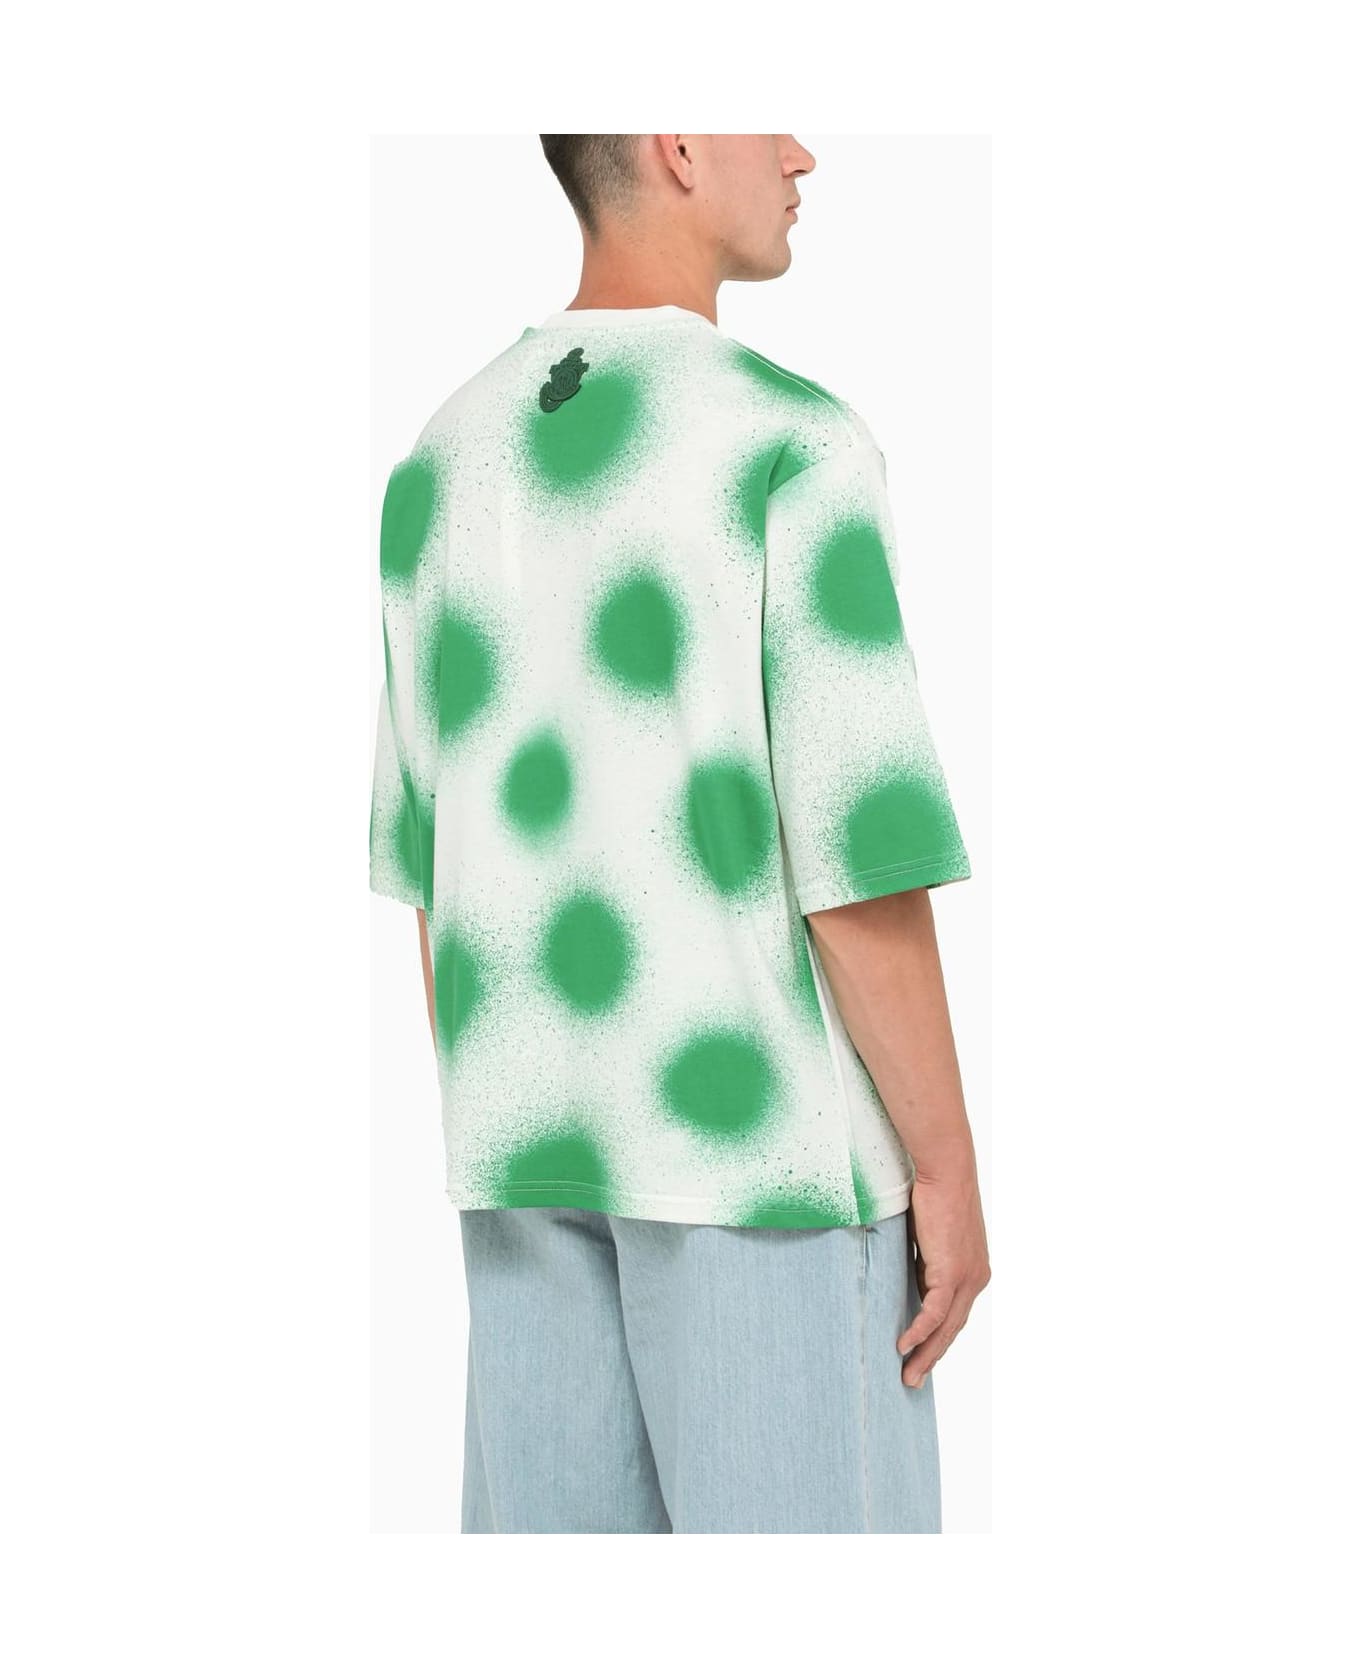 Moncler Genius White And Green Polka Dot T-shirt - WHITE